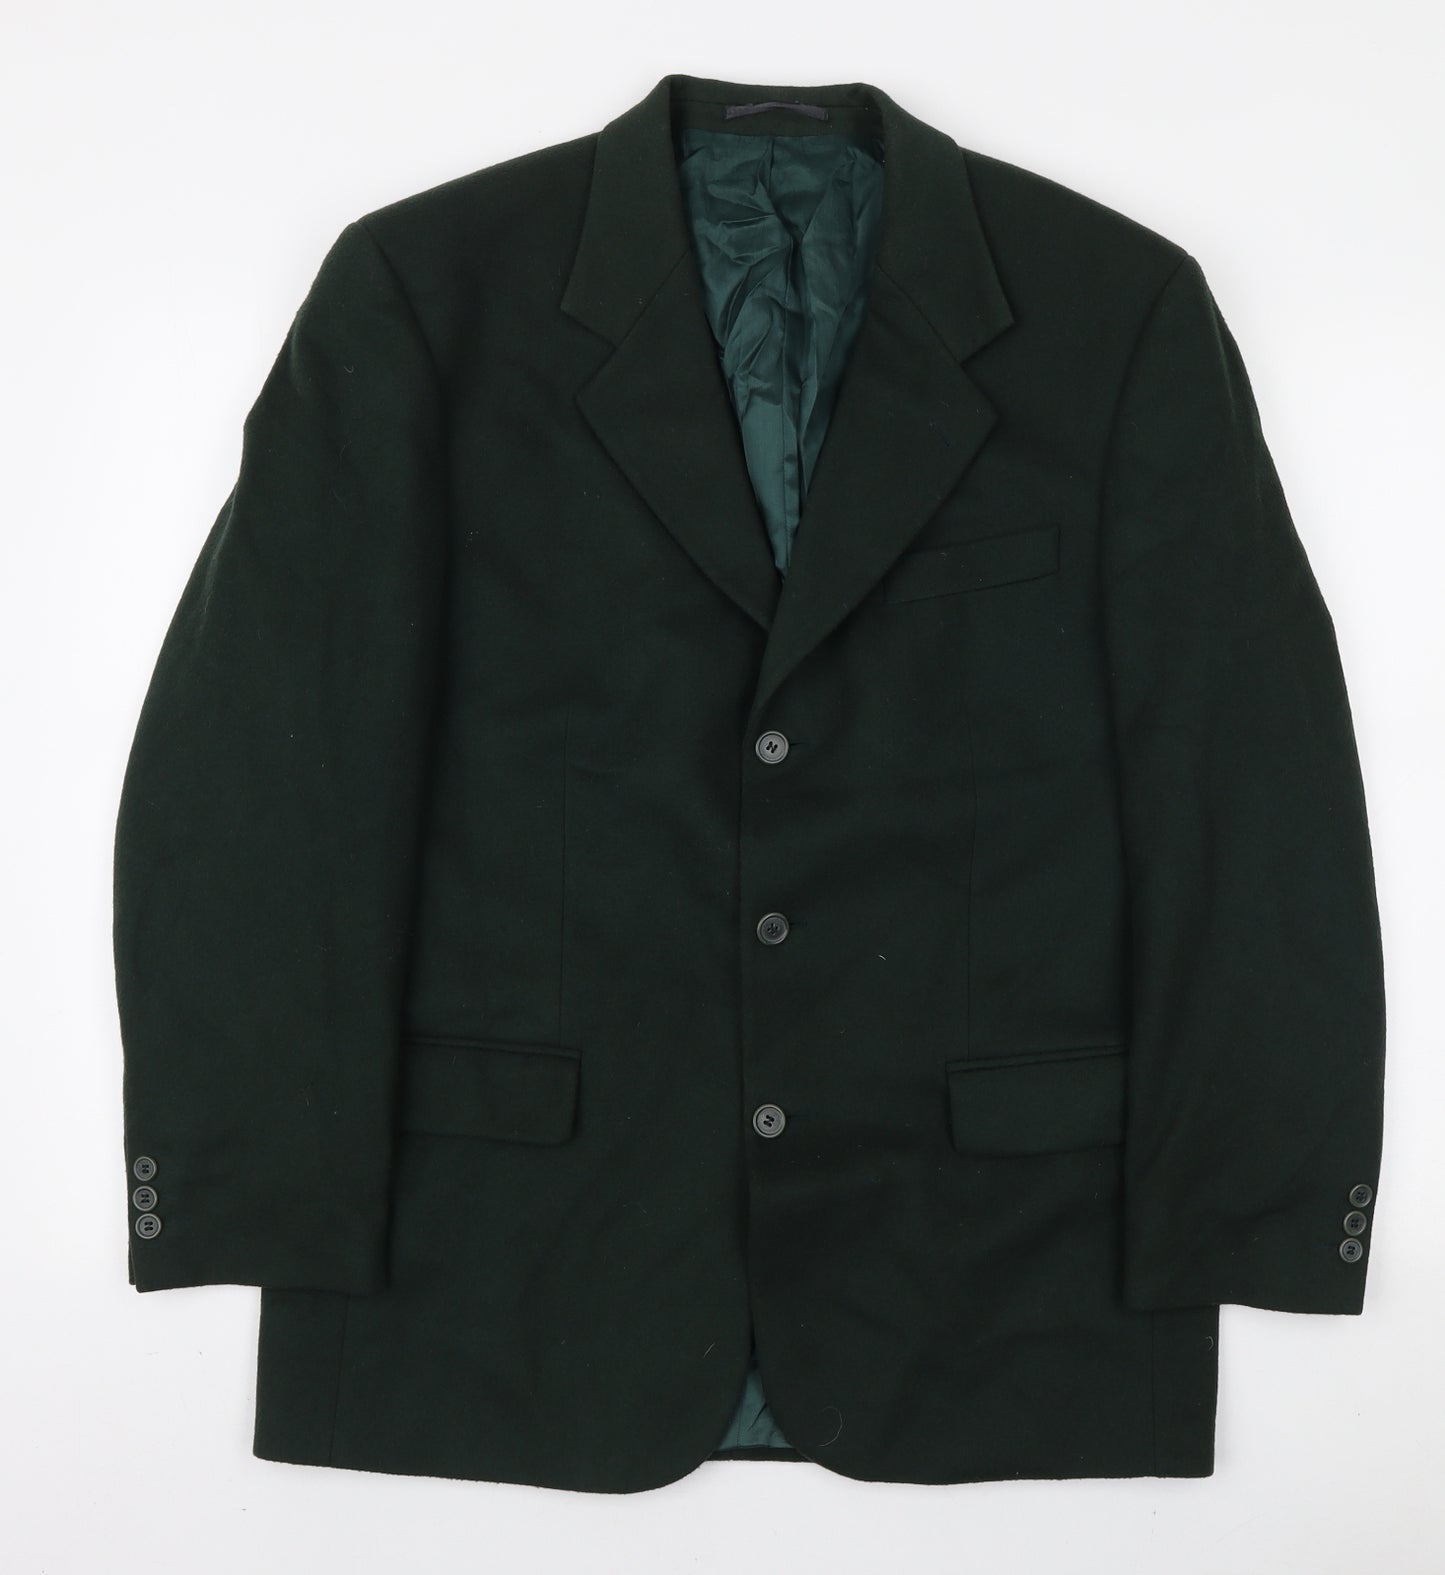 Tom English Mens Green Jacket Blazer Size L Button